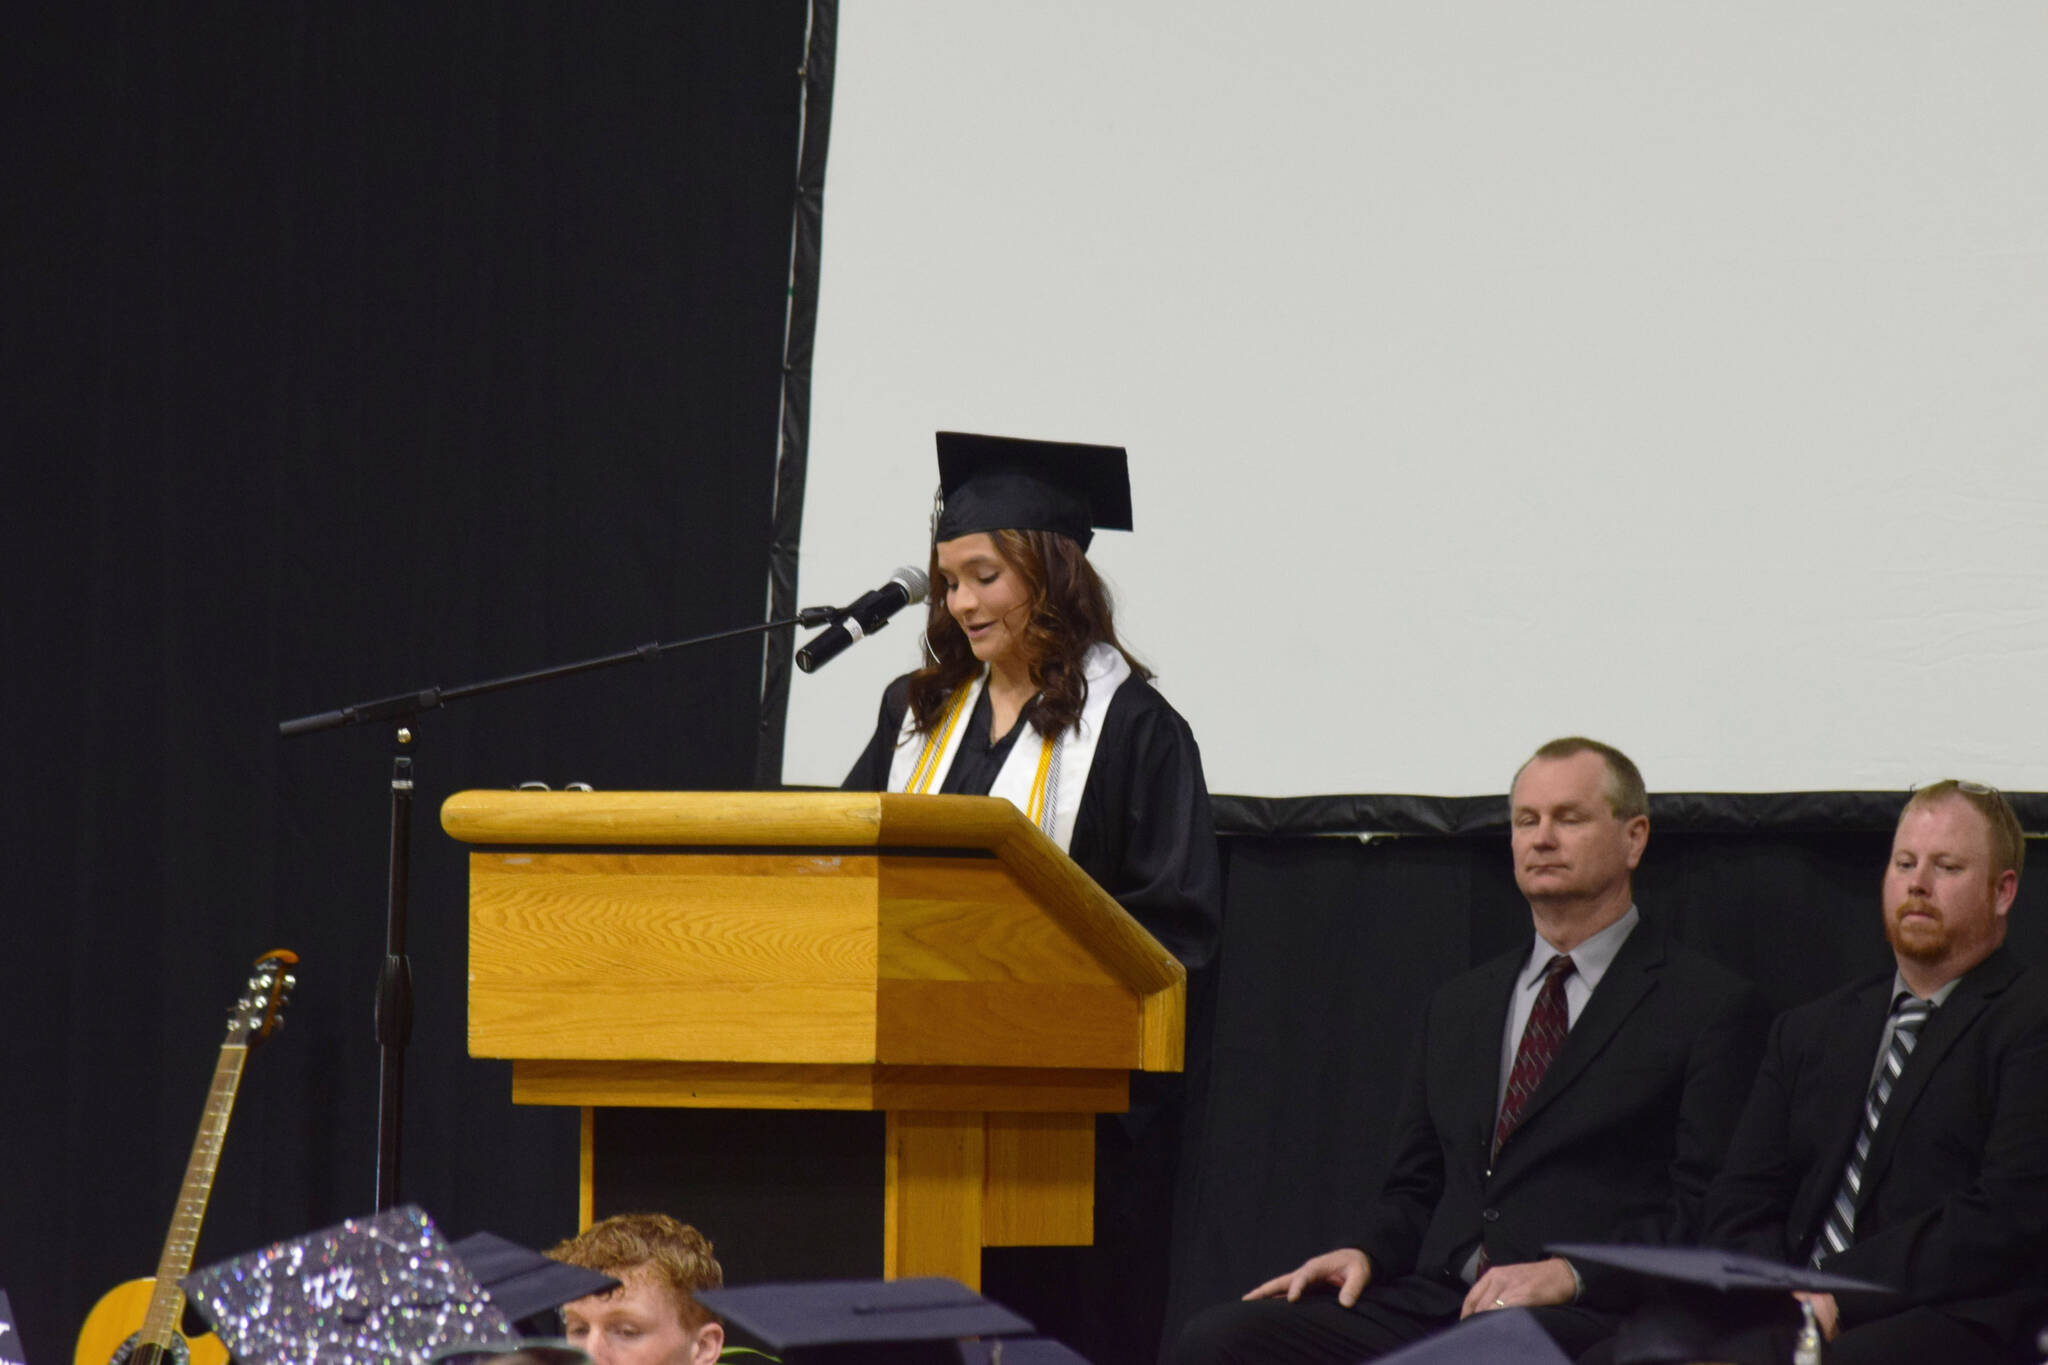 Nikiski Middle/High School Student Body President Madalyn Stichal speaks during the school’s 2022 commencement ceremony on Monday, May 16, 2022 in Nikiski, Alaska. (Ashlyn O’Hara/Peninsula Clarion)